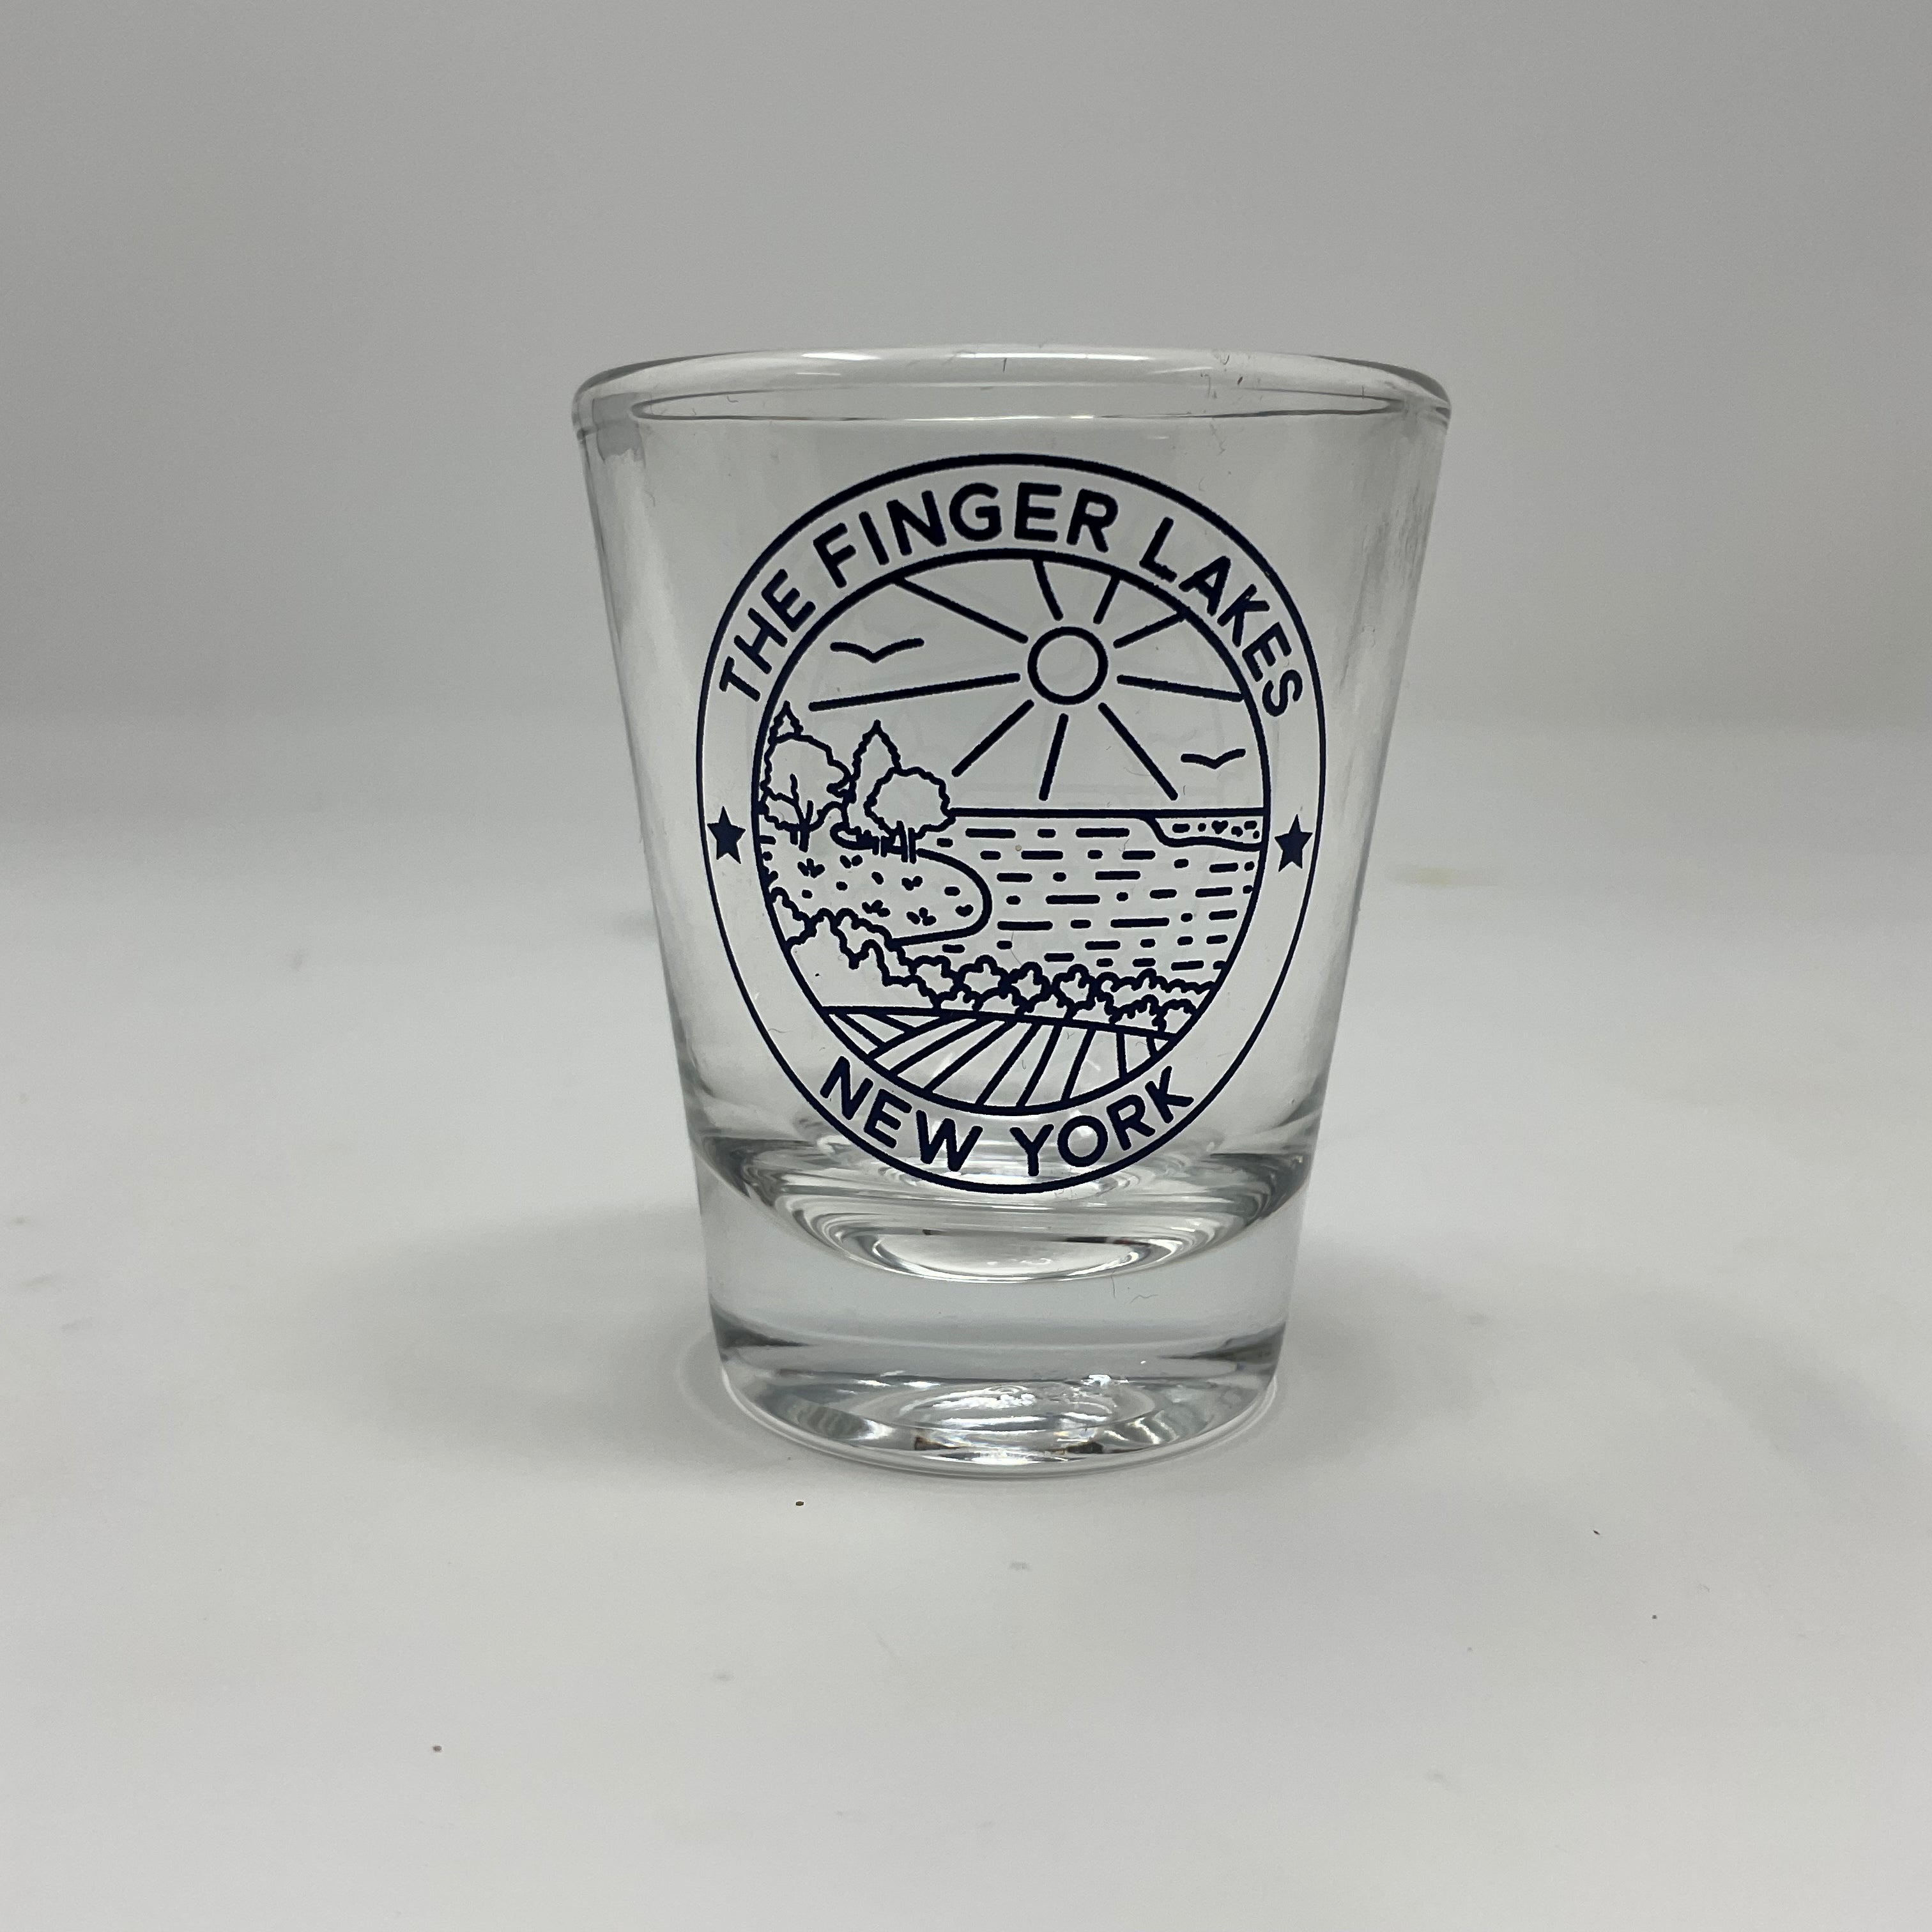 The Finger Lakes Shot Glass